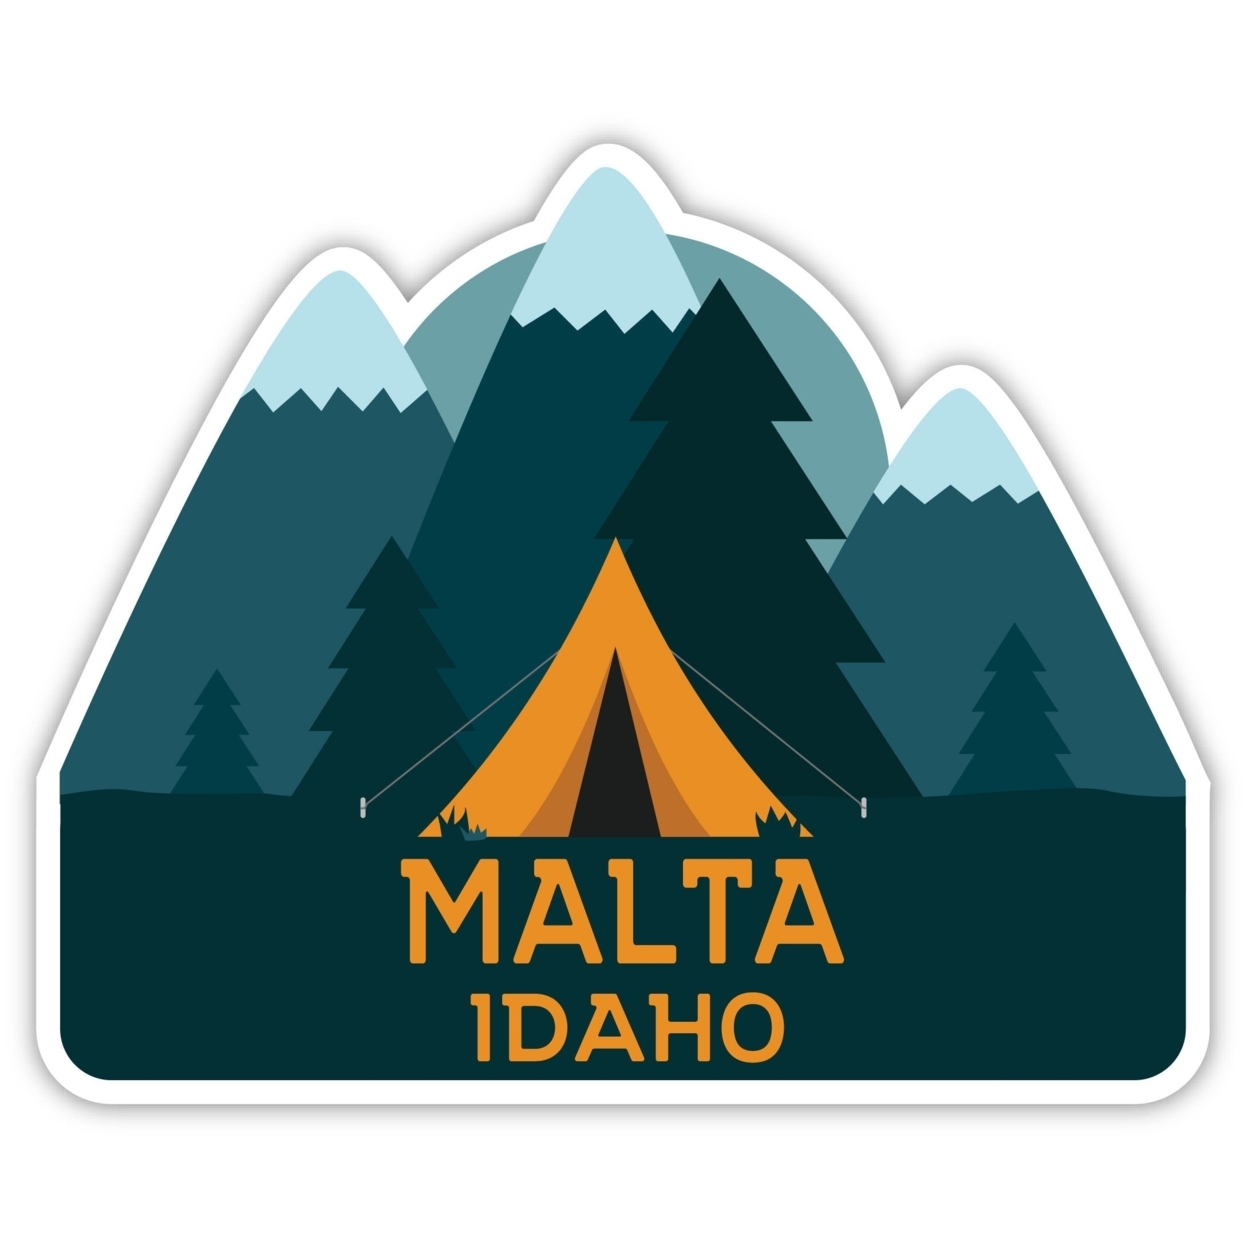 Malta Idaho Souvenir Decorative Stickers (Choose Theme And Size) - 2-Inch, Tent